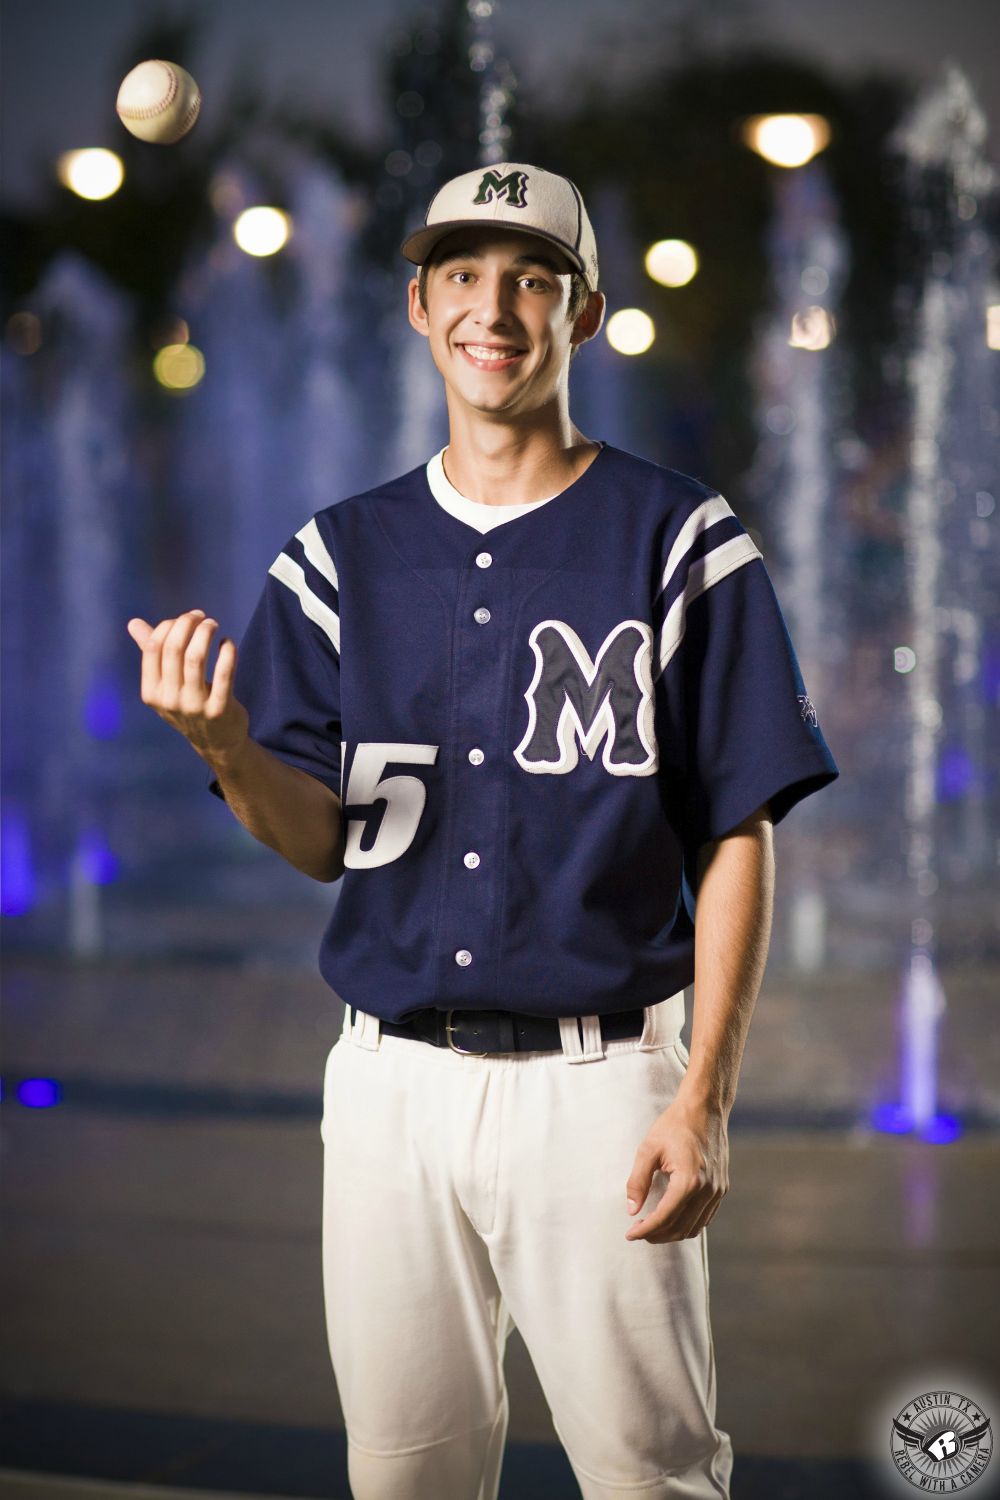 Baseball player high school senior portraits in Austin at the Liz Carpenter Fountain at Butler Park taken at night.